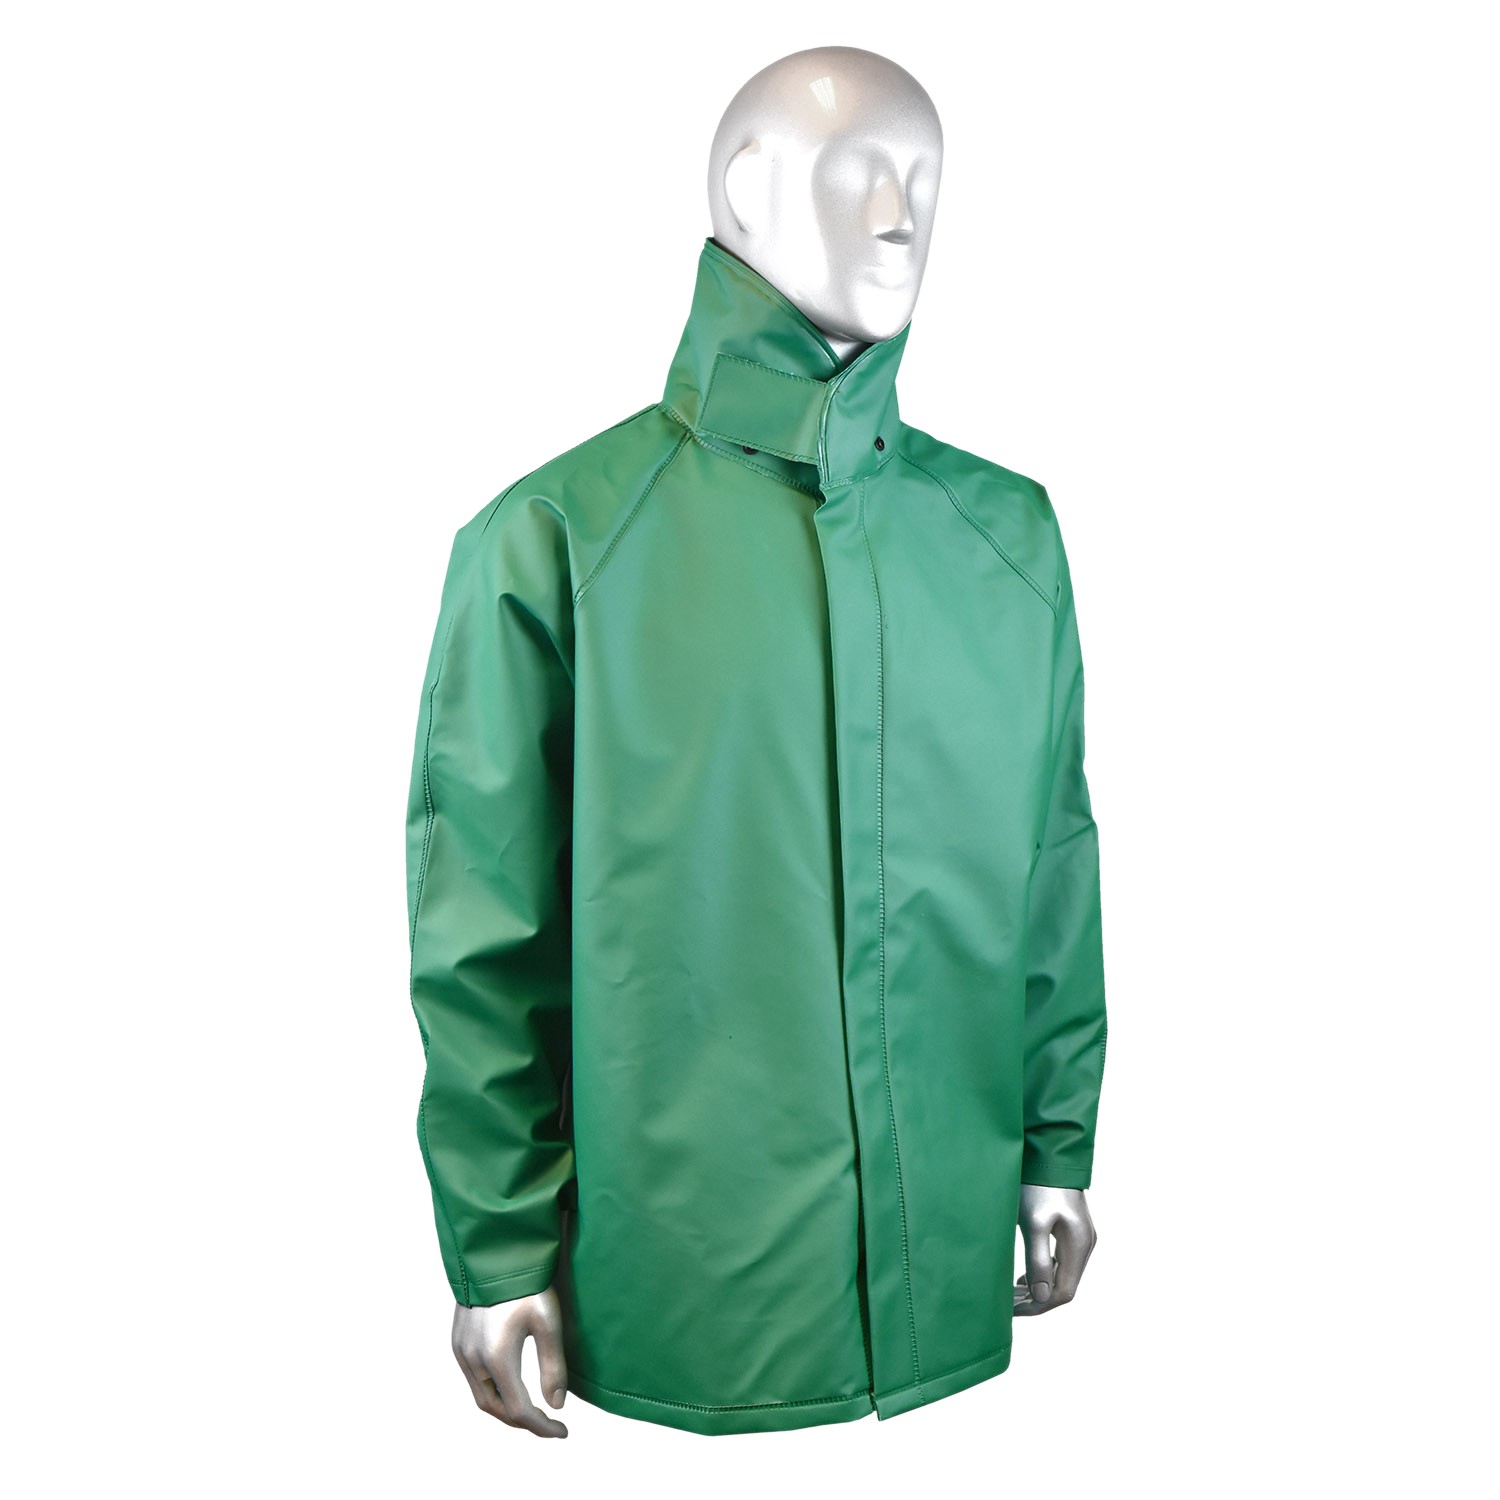 DURARAD 42 Acid Gear Rainwear | Slatebelt Safety | PPE | Safety Supplies